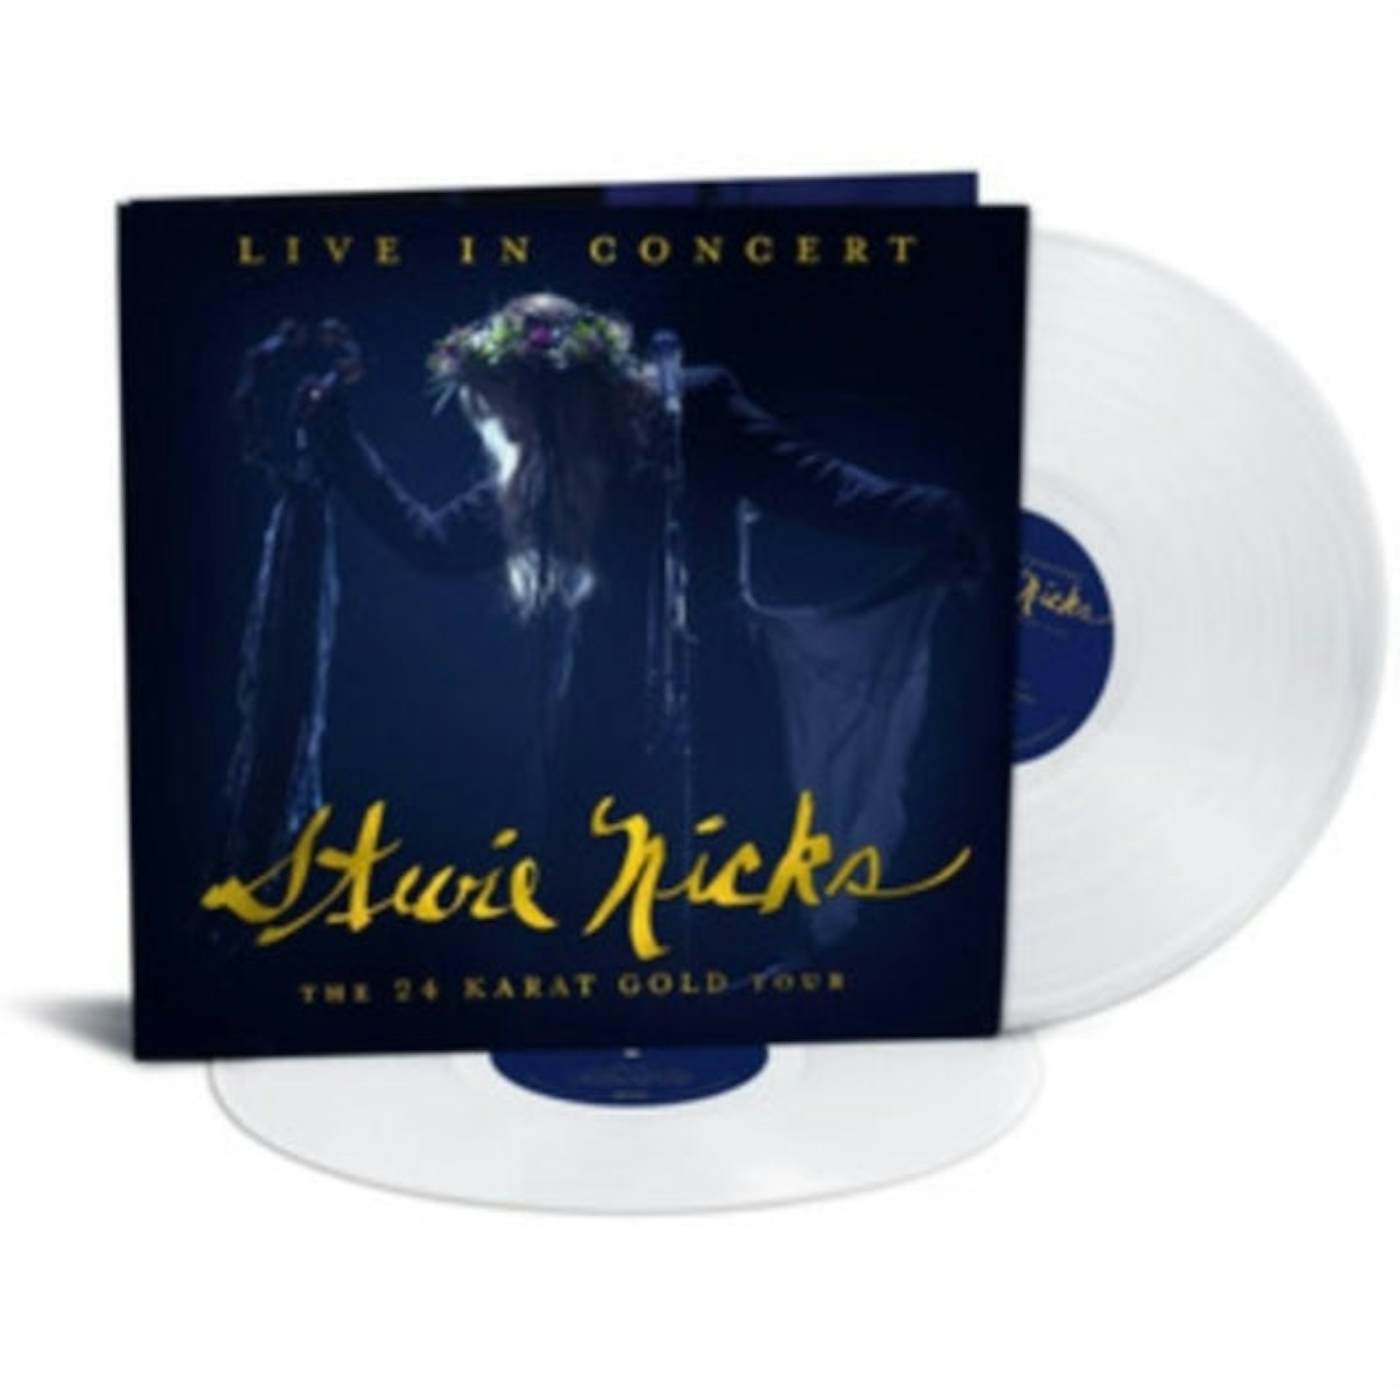 Stevie Nicks LP Vinyl Record - Live In Concert The 24 Karat Gold Tour (Clear Vinyl)